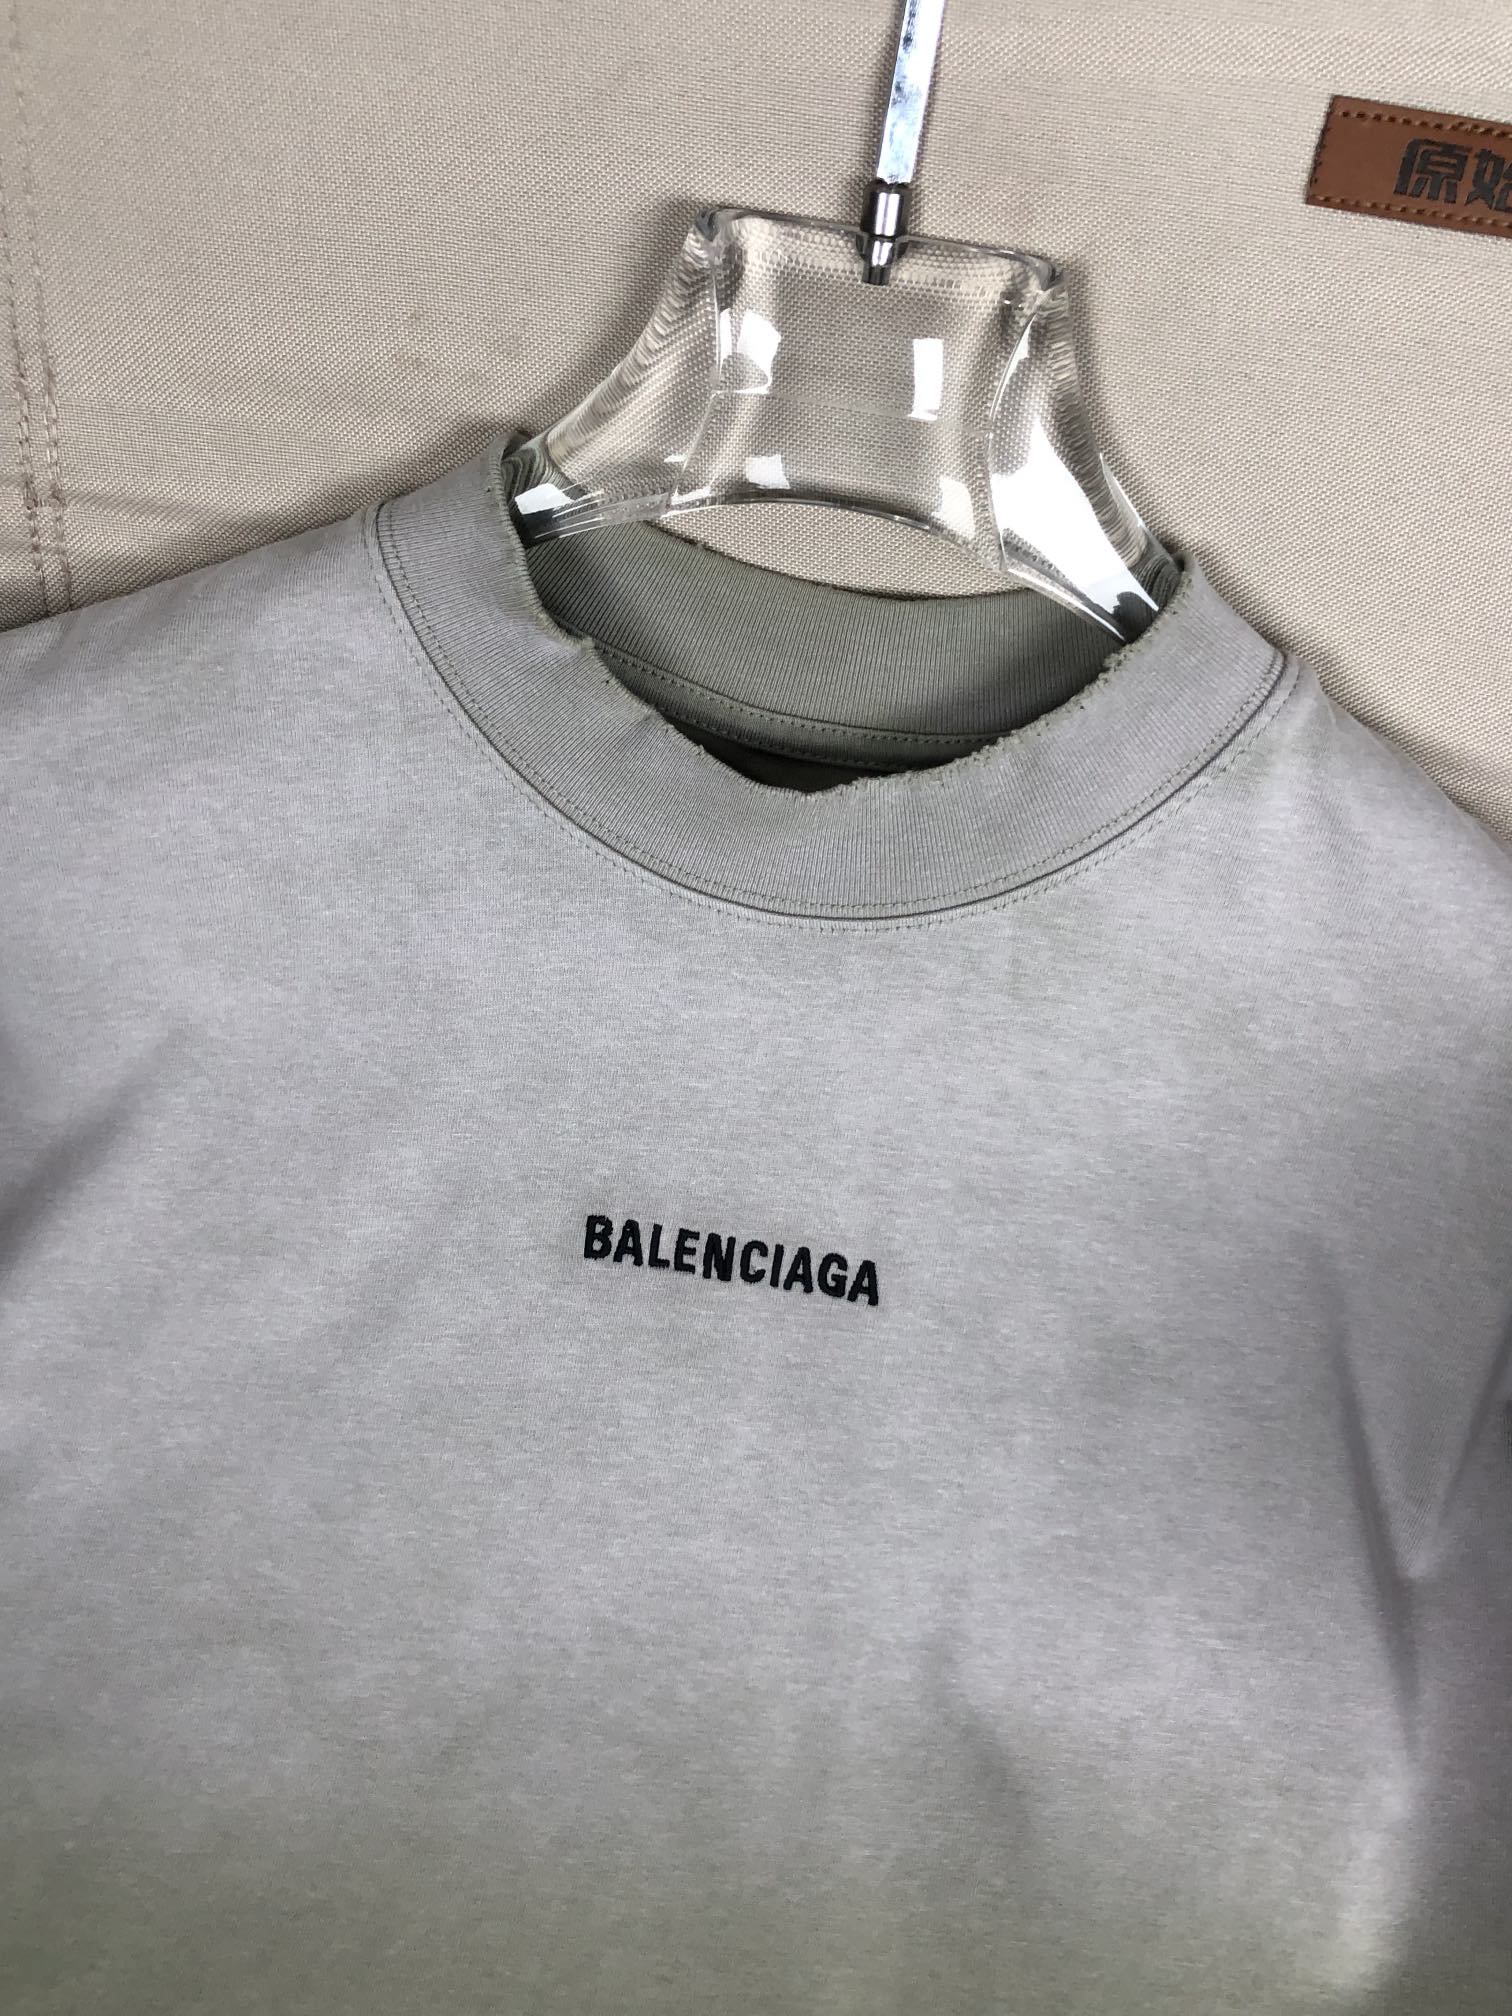 Balenciaga Clothing T-Shirt Grey Men Cotton Vintage Short Sleeve